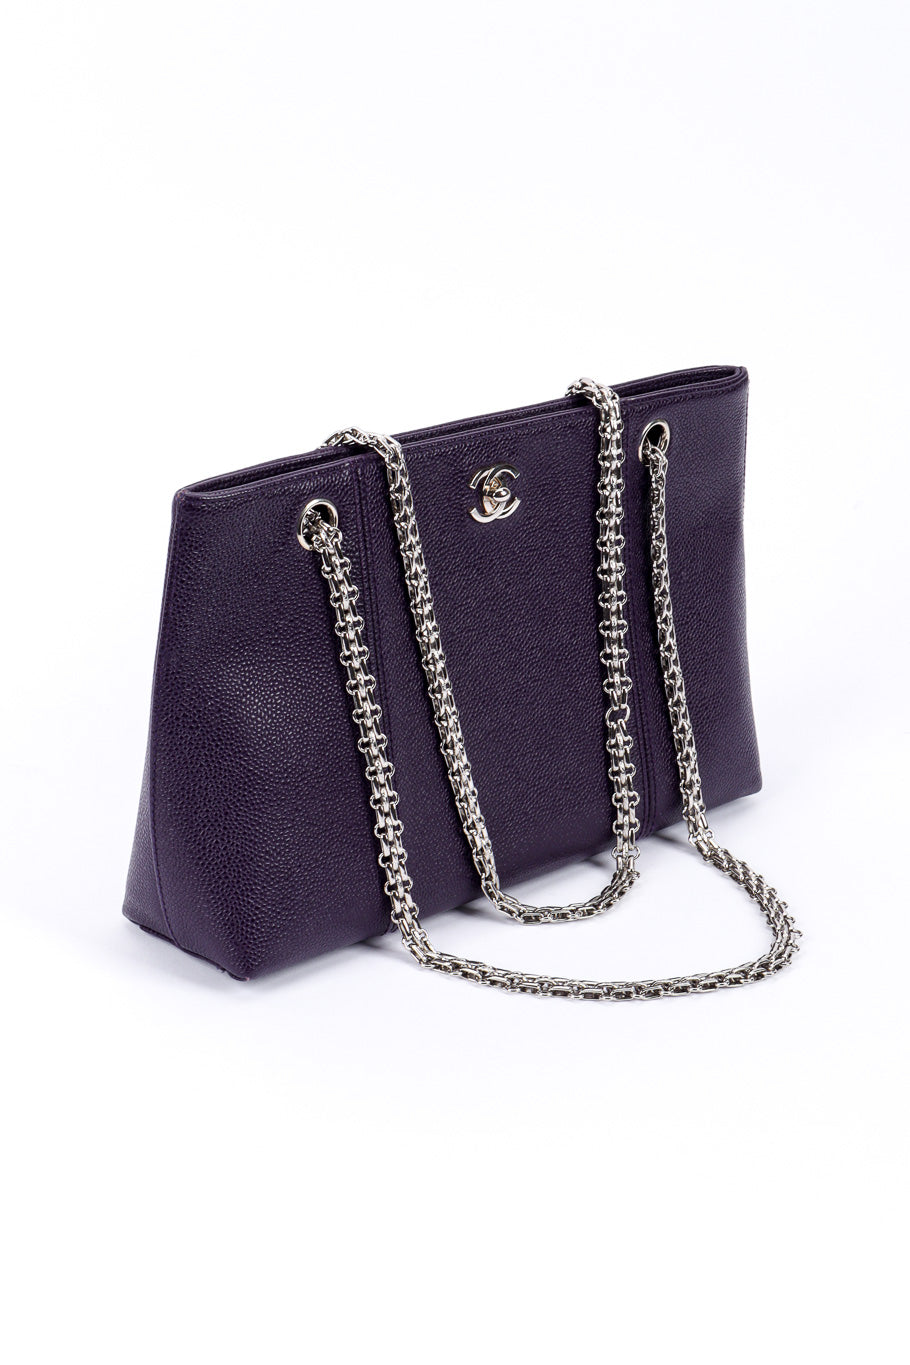 Chanel Bijoux Chain Shoulder Bag 3/4 front @recessla